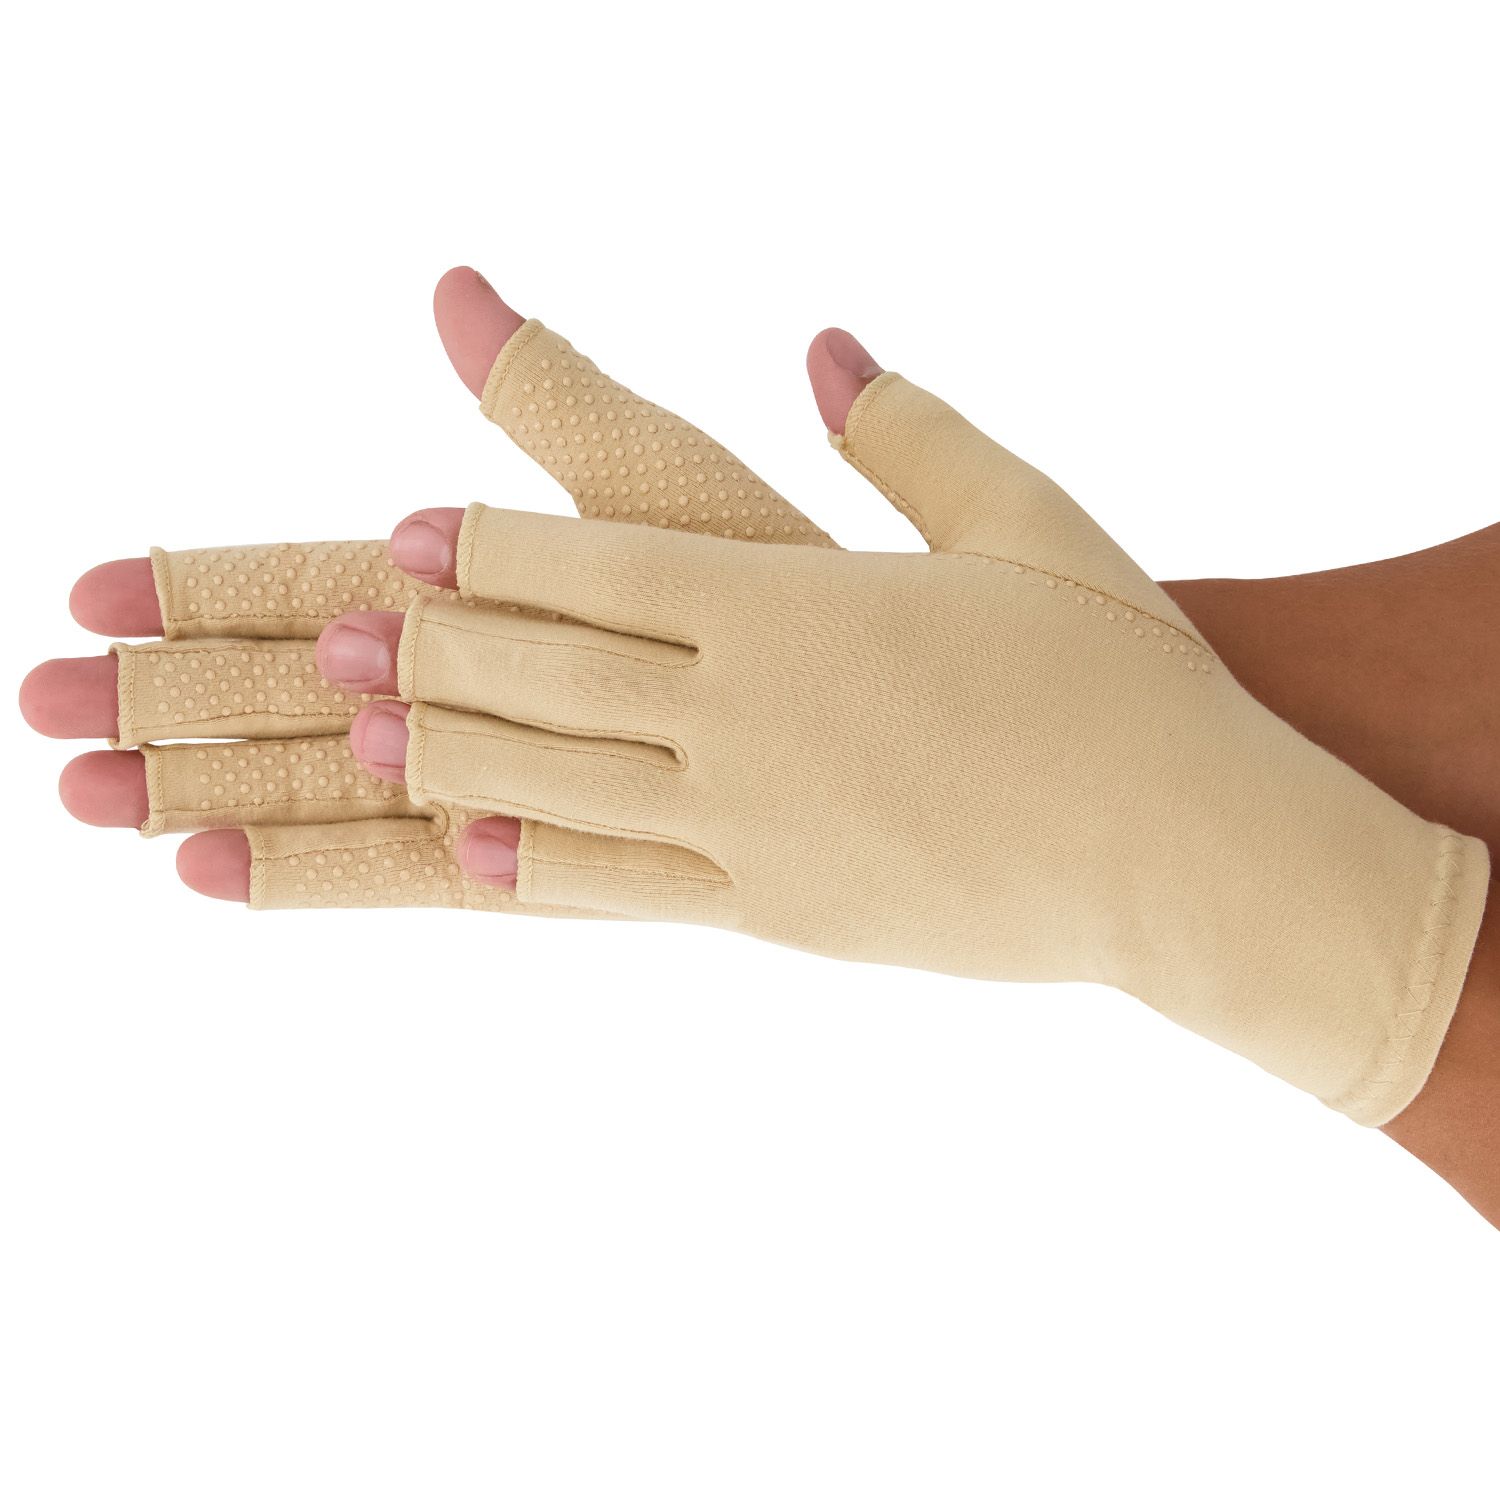 dunimed rheumatoid arthritis osteoarthritis gloves with anti-slip layer in skin colour